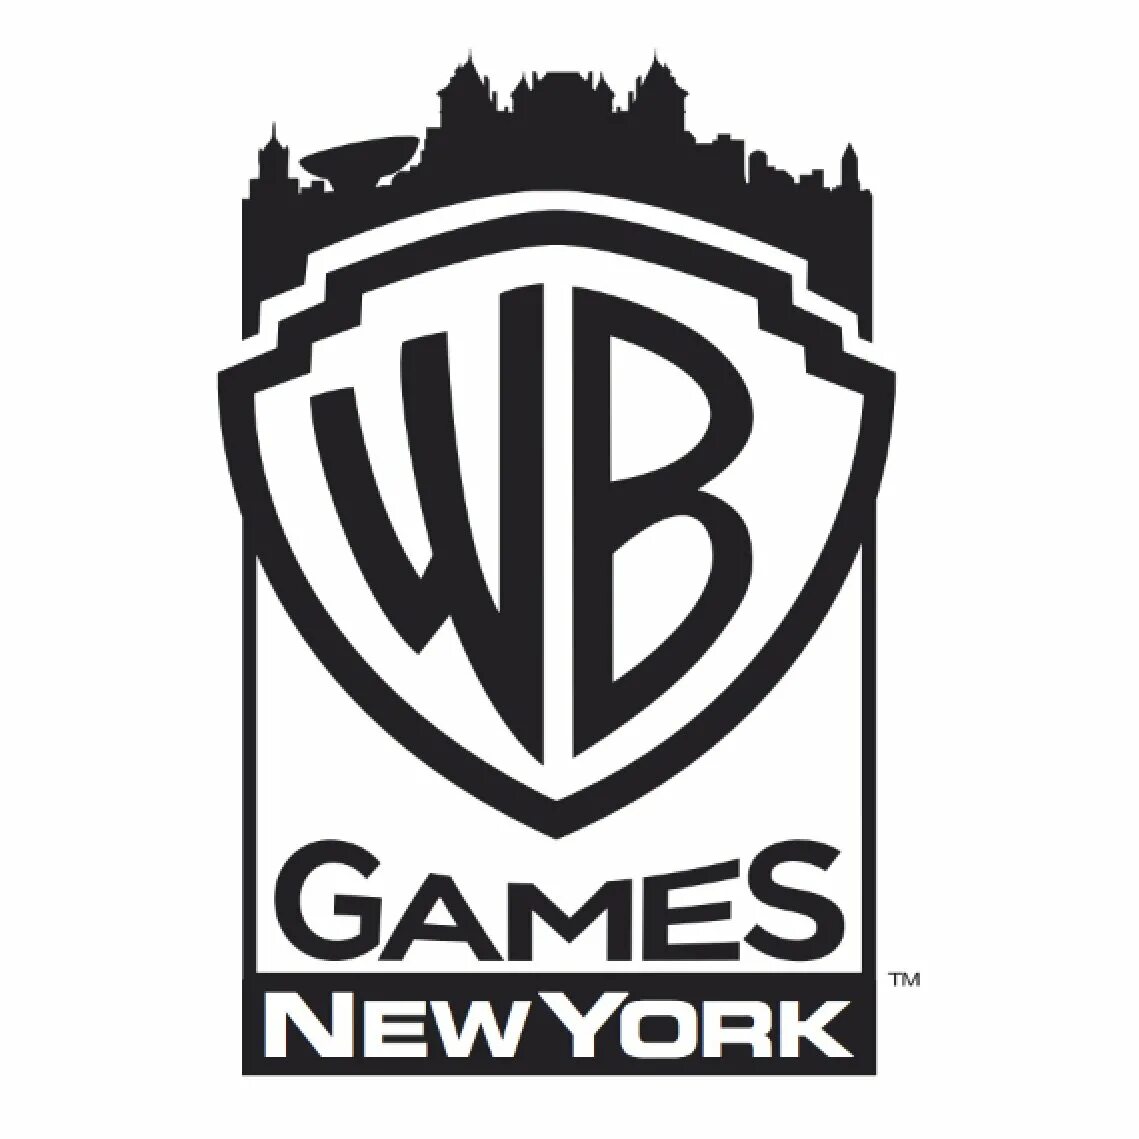 Wb games игры. Игры WB. Игры Warner brothers. WB games logo. Warner Bros games logo.